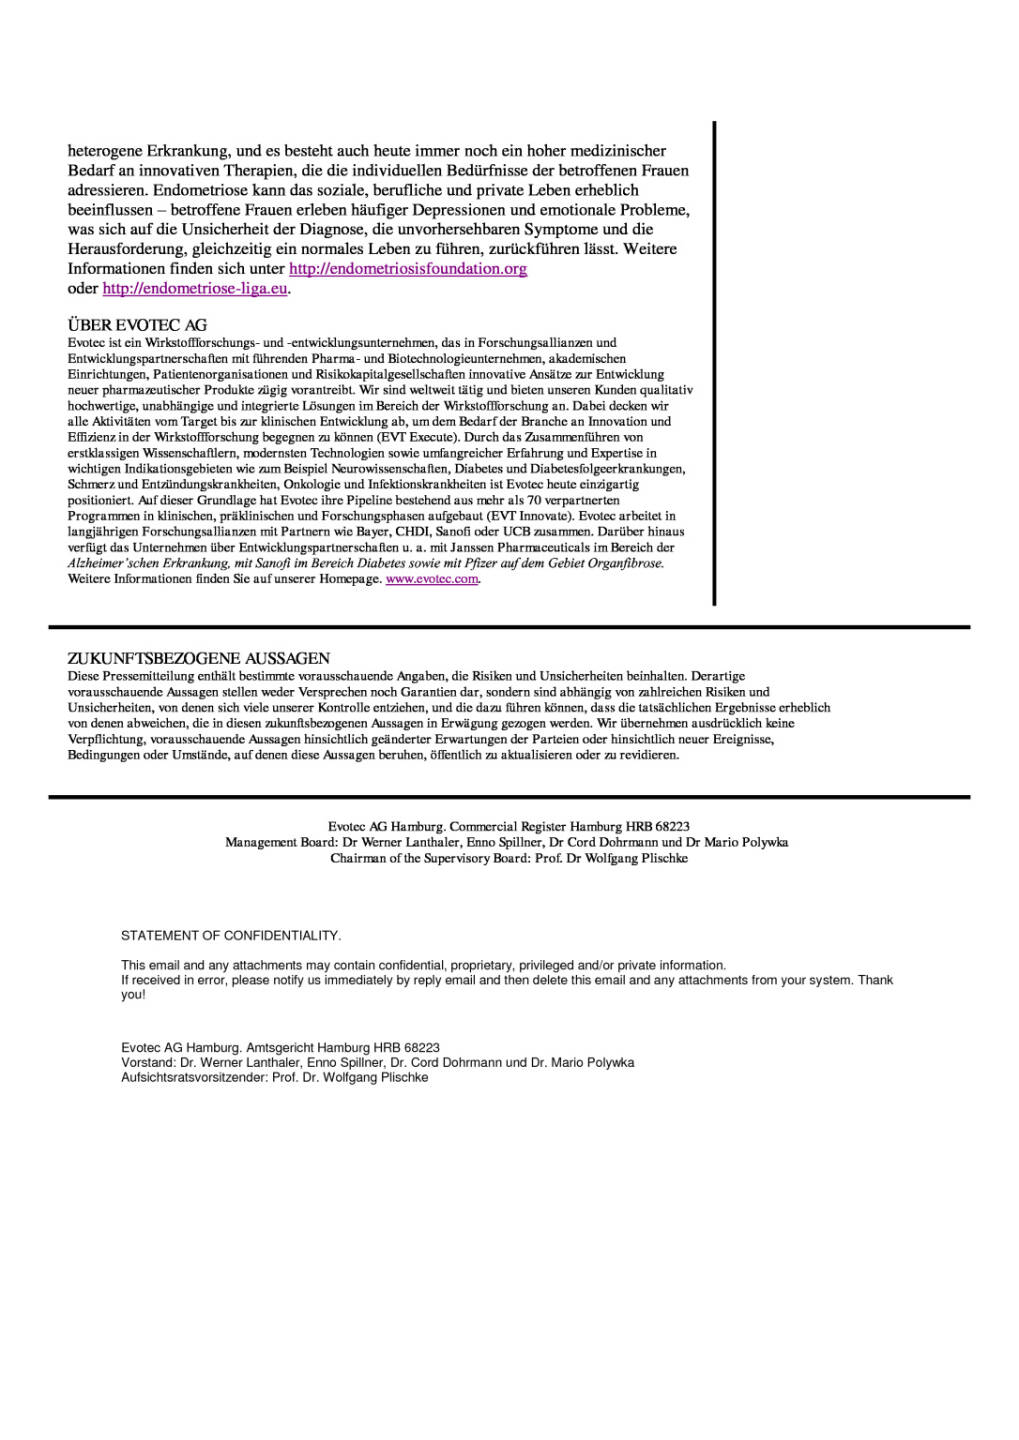 Evotec: Meilenstein in Multi-Target Allianz mit Bayer in Endometriose, Seite 2/2, komplettes Dokument unter http://boerse-social.com/static/uploads/file_1566_evotec_meilenstein_in_multi-target_allianz_mit_bayer_in_endometriose.pdf